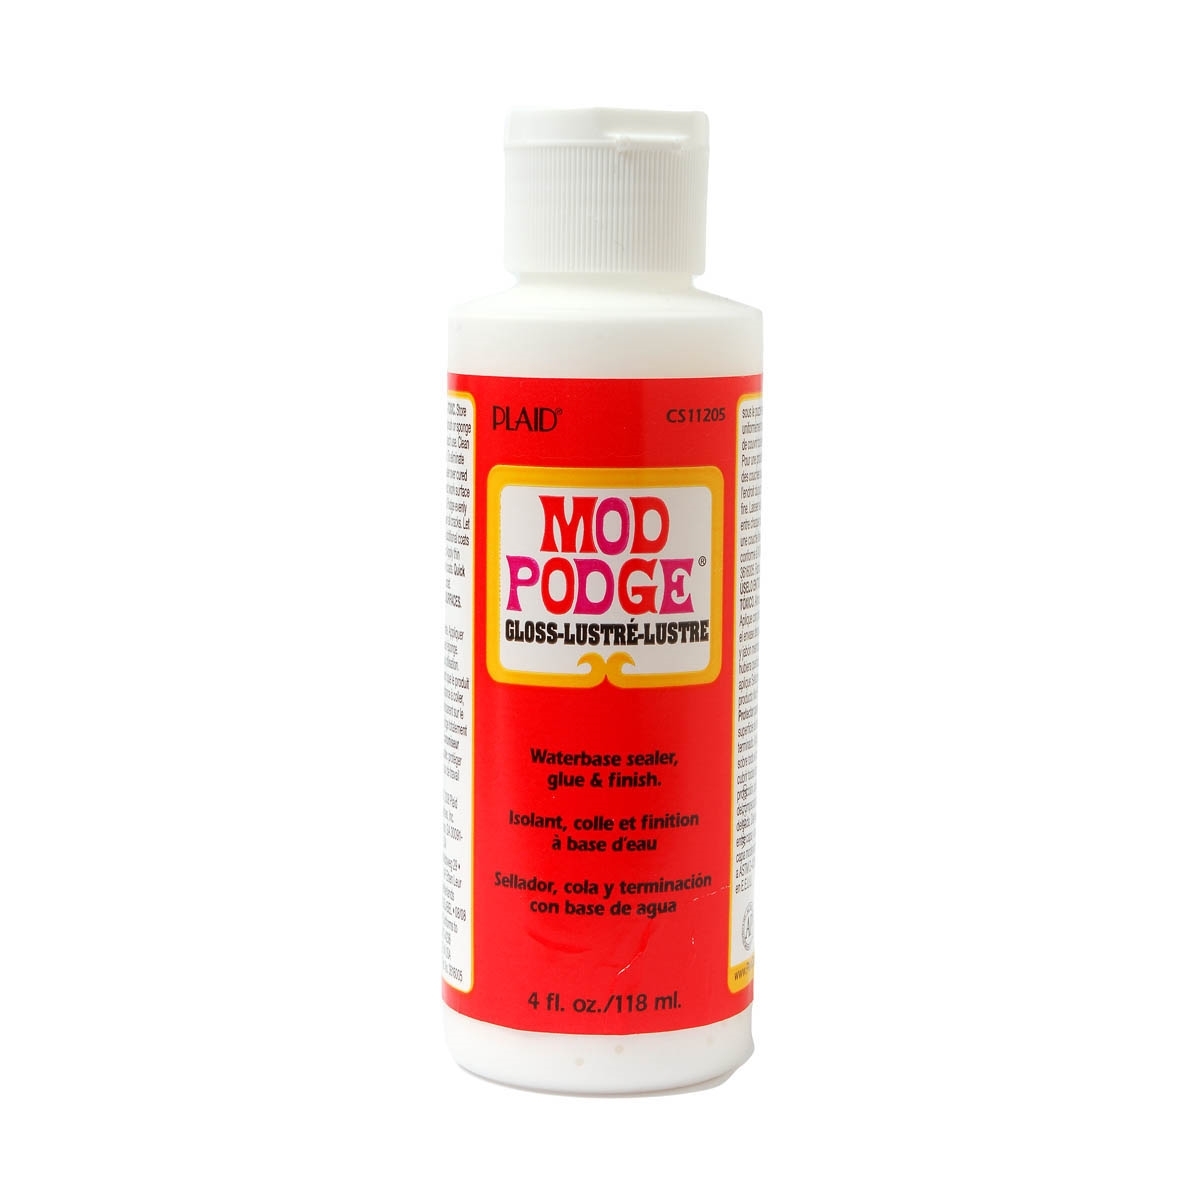 Mod Podge Gloss Water Base Sealer/Glue And Finish, White, 4 oz 118ml